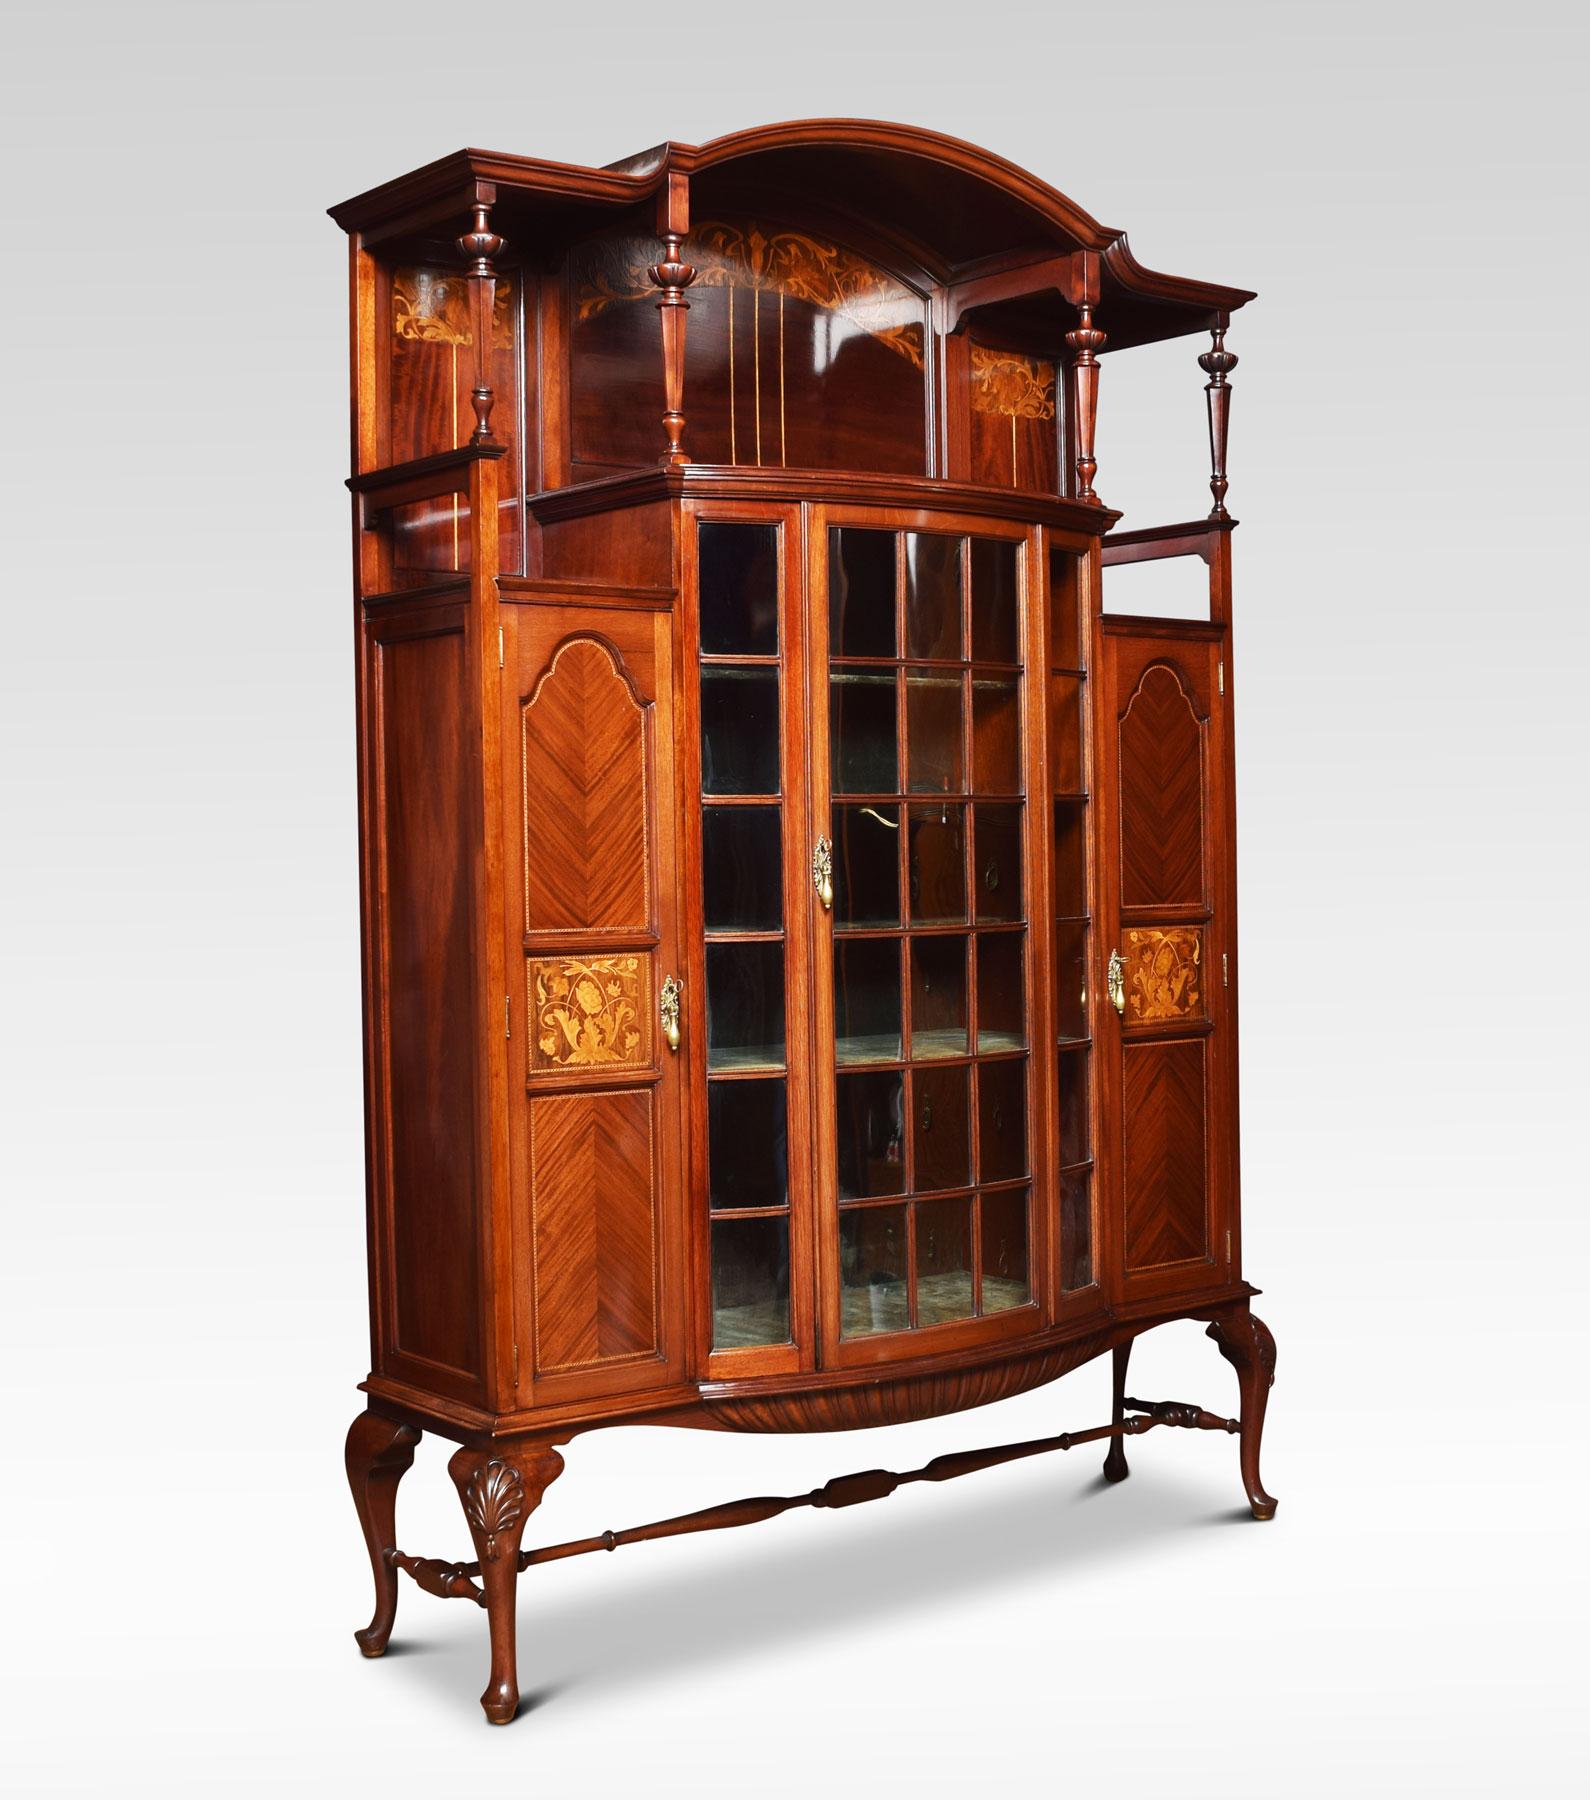 British Art Nouveau Inlaid Display Cabinet